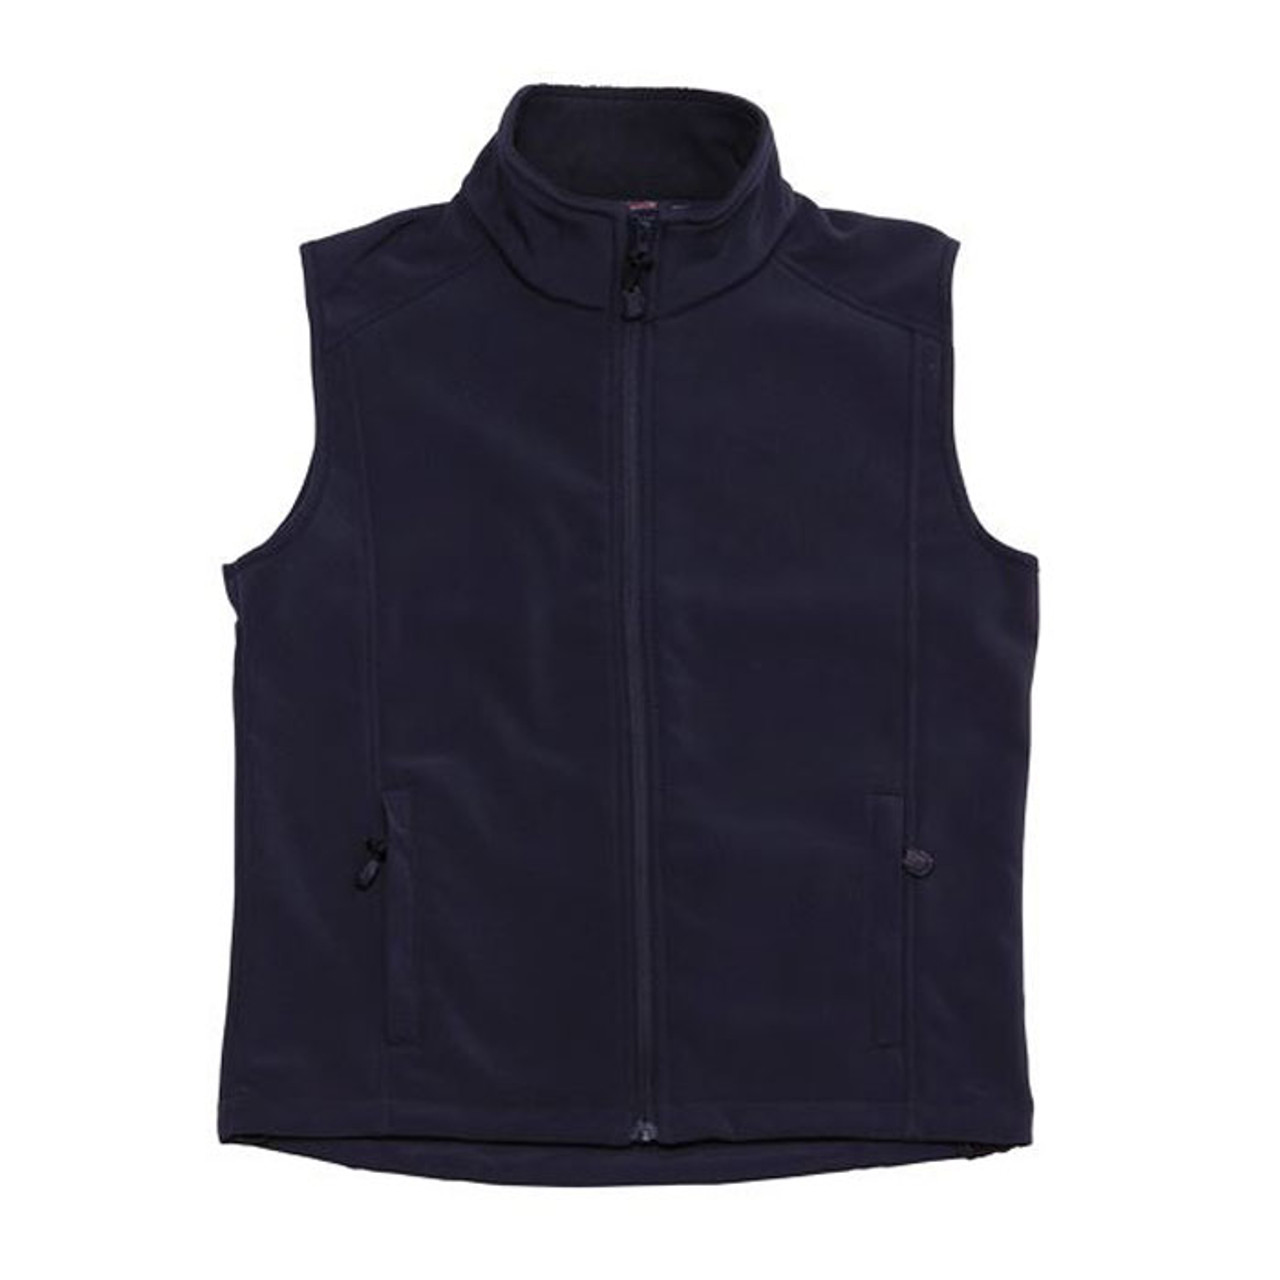 ladies softshell vests | warm winter vest & jacket | wholesale clothing ...